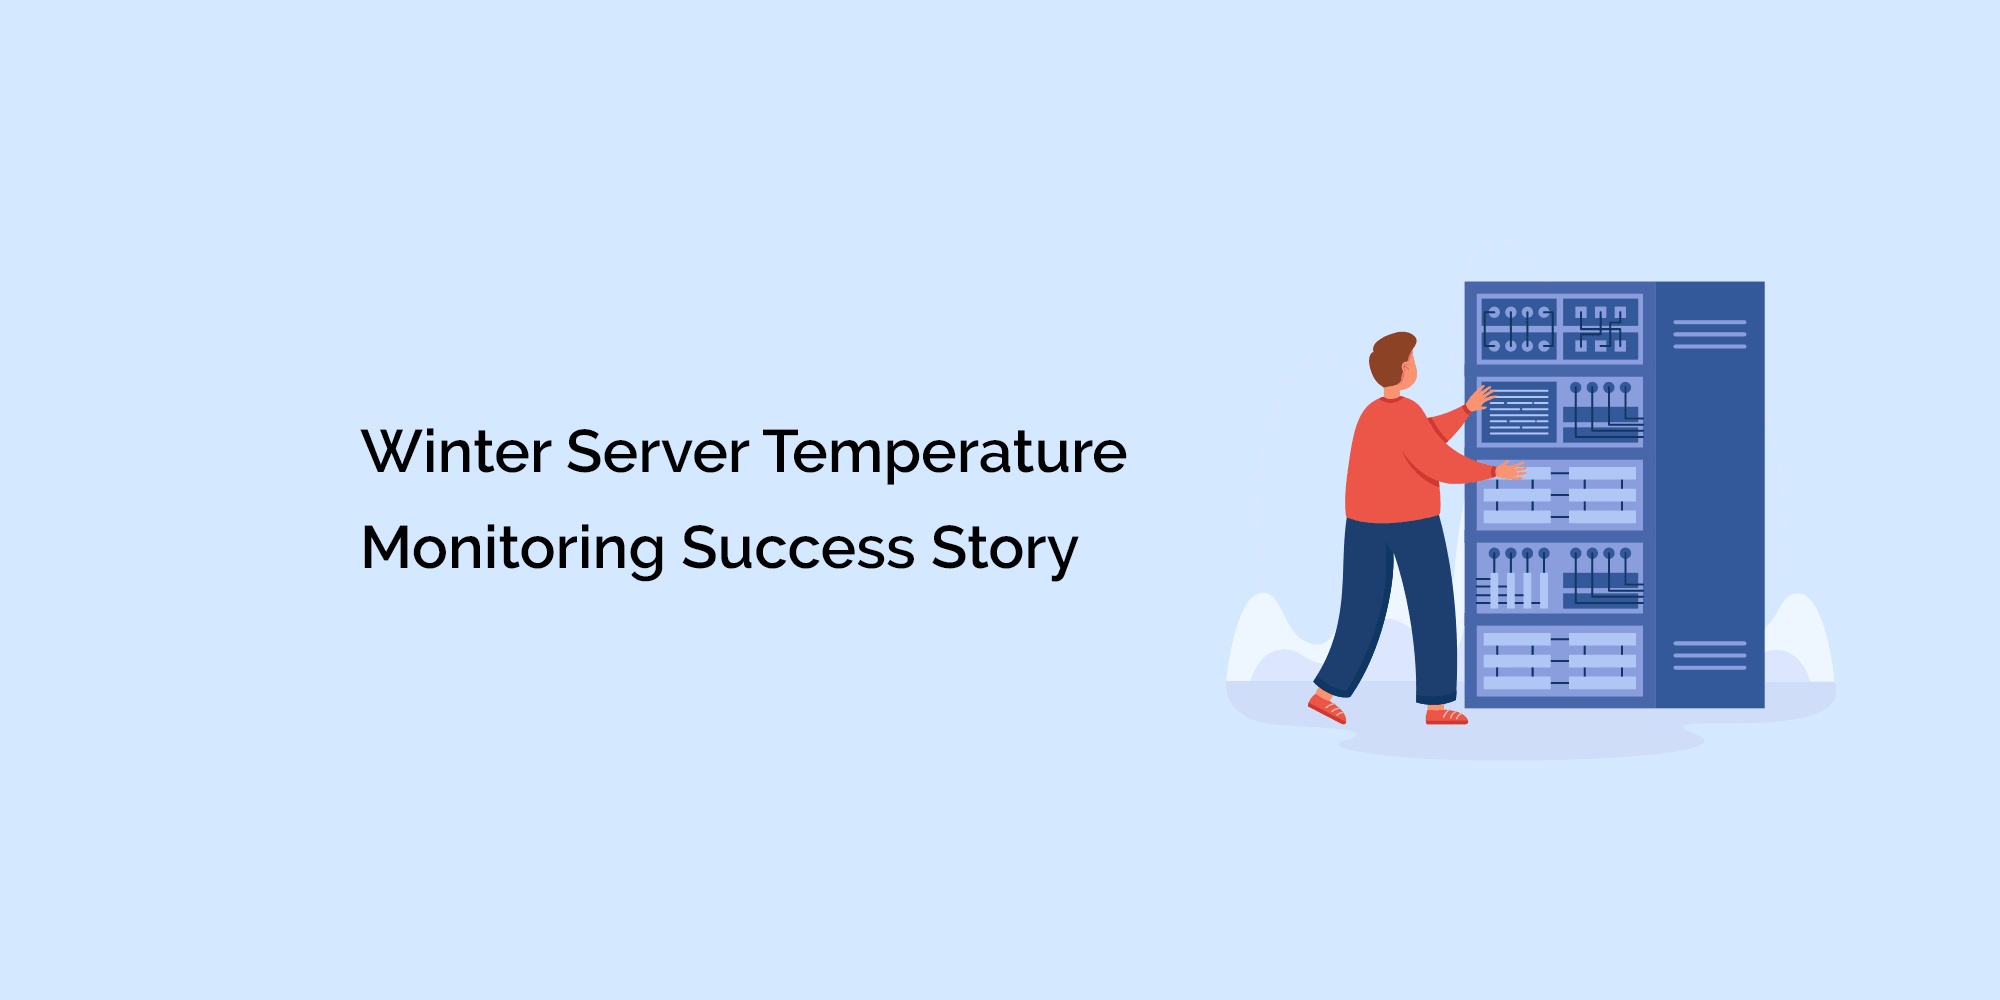 Case Study: Winter Server Temperature Monitoring Success Story